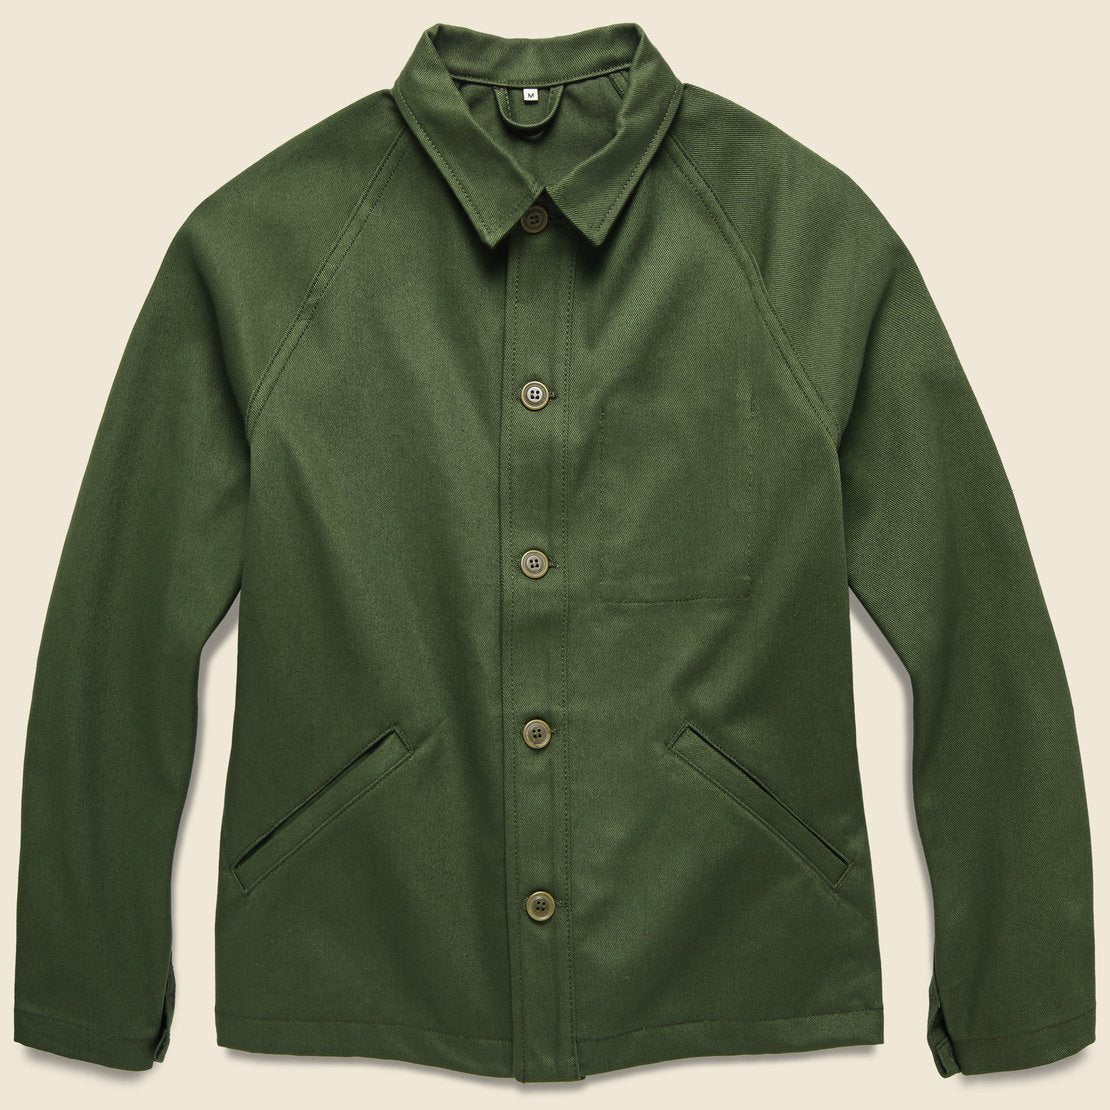 Living Grateful Shop Jacket - Olive - House of LAND - STAG Provisions - Outerwear - Coat / Jacket